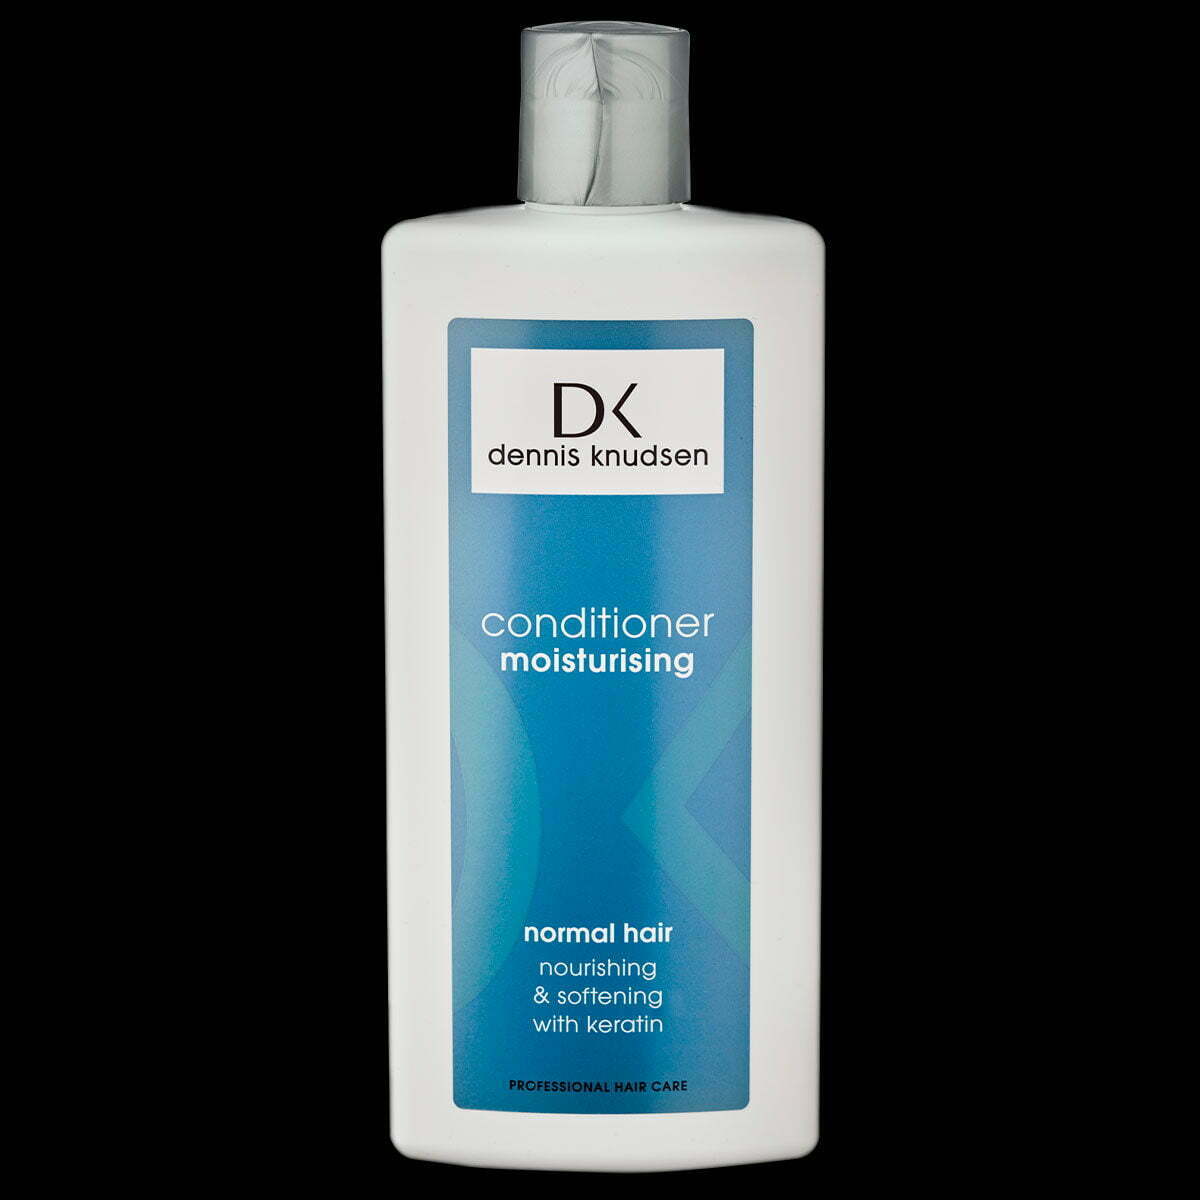 conditioner moisturising normal hair dennis knudsen professional